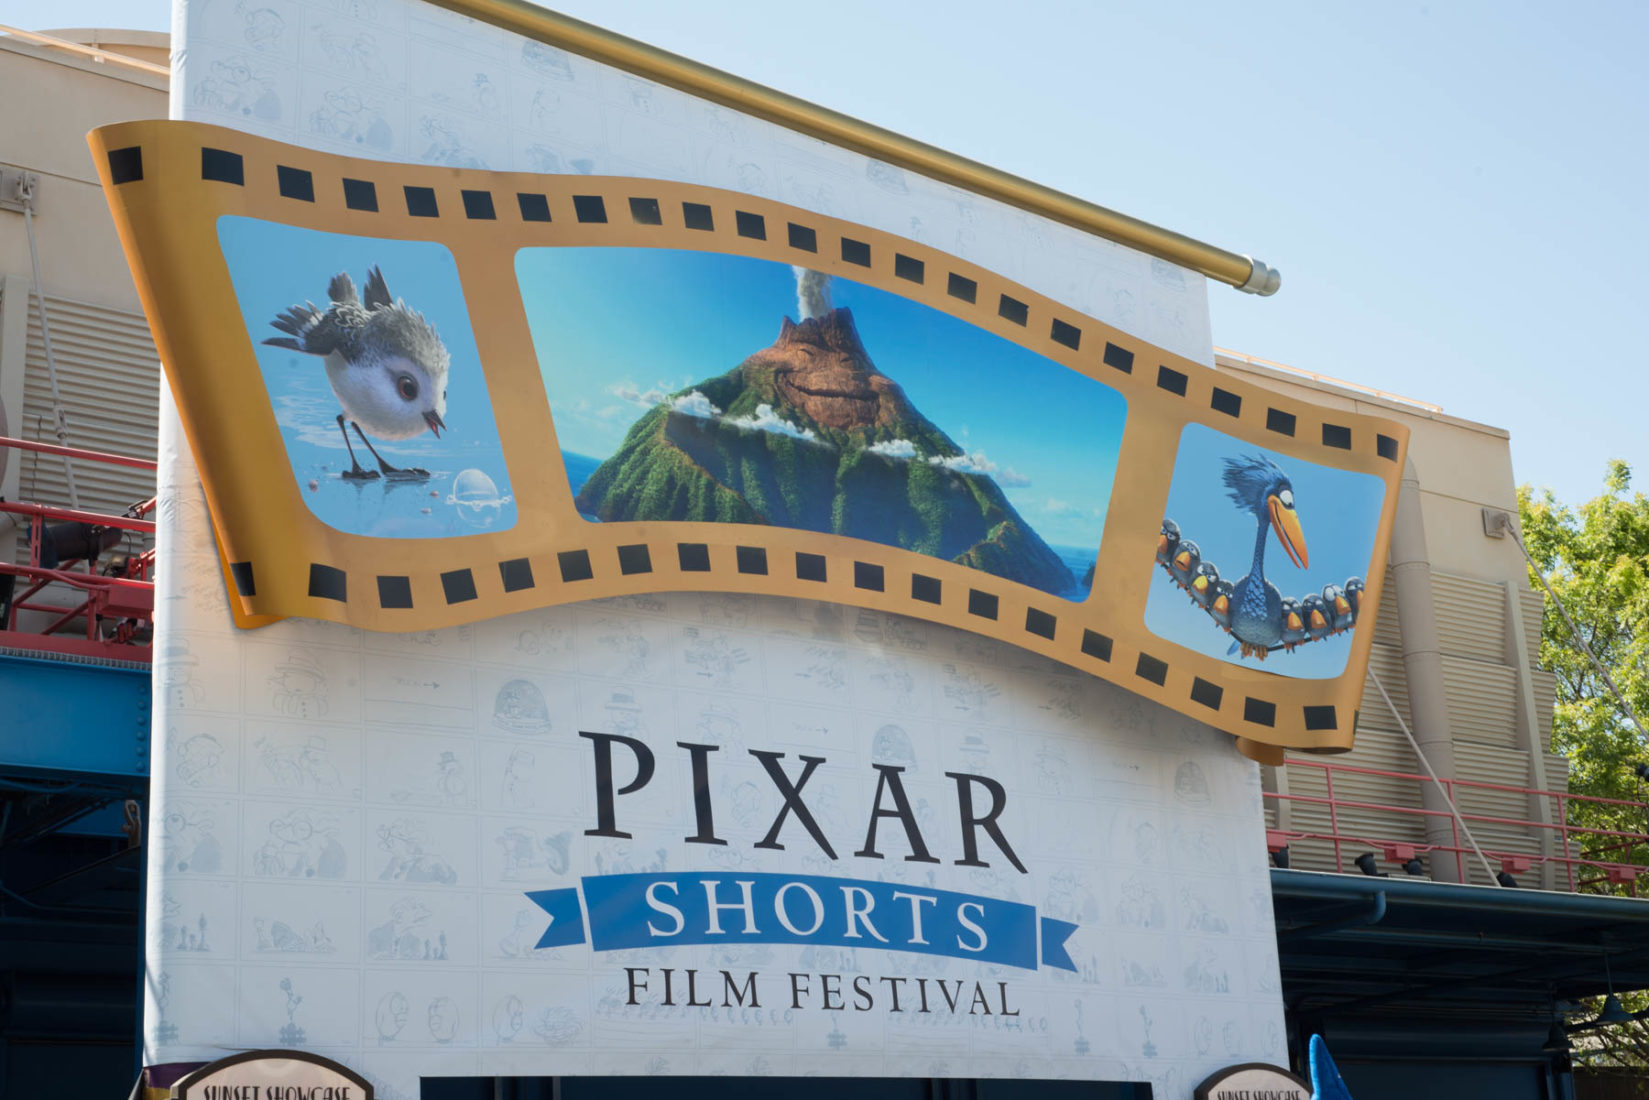 Pixar Shorts Entrance at the Sunset Showcase Theatre in Disneyland's California Adventure